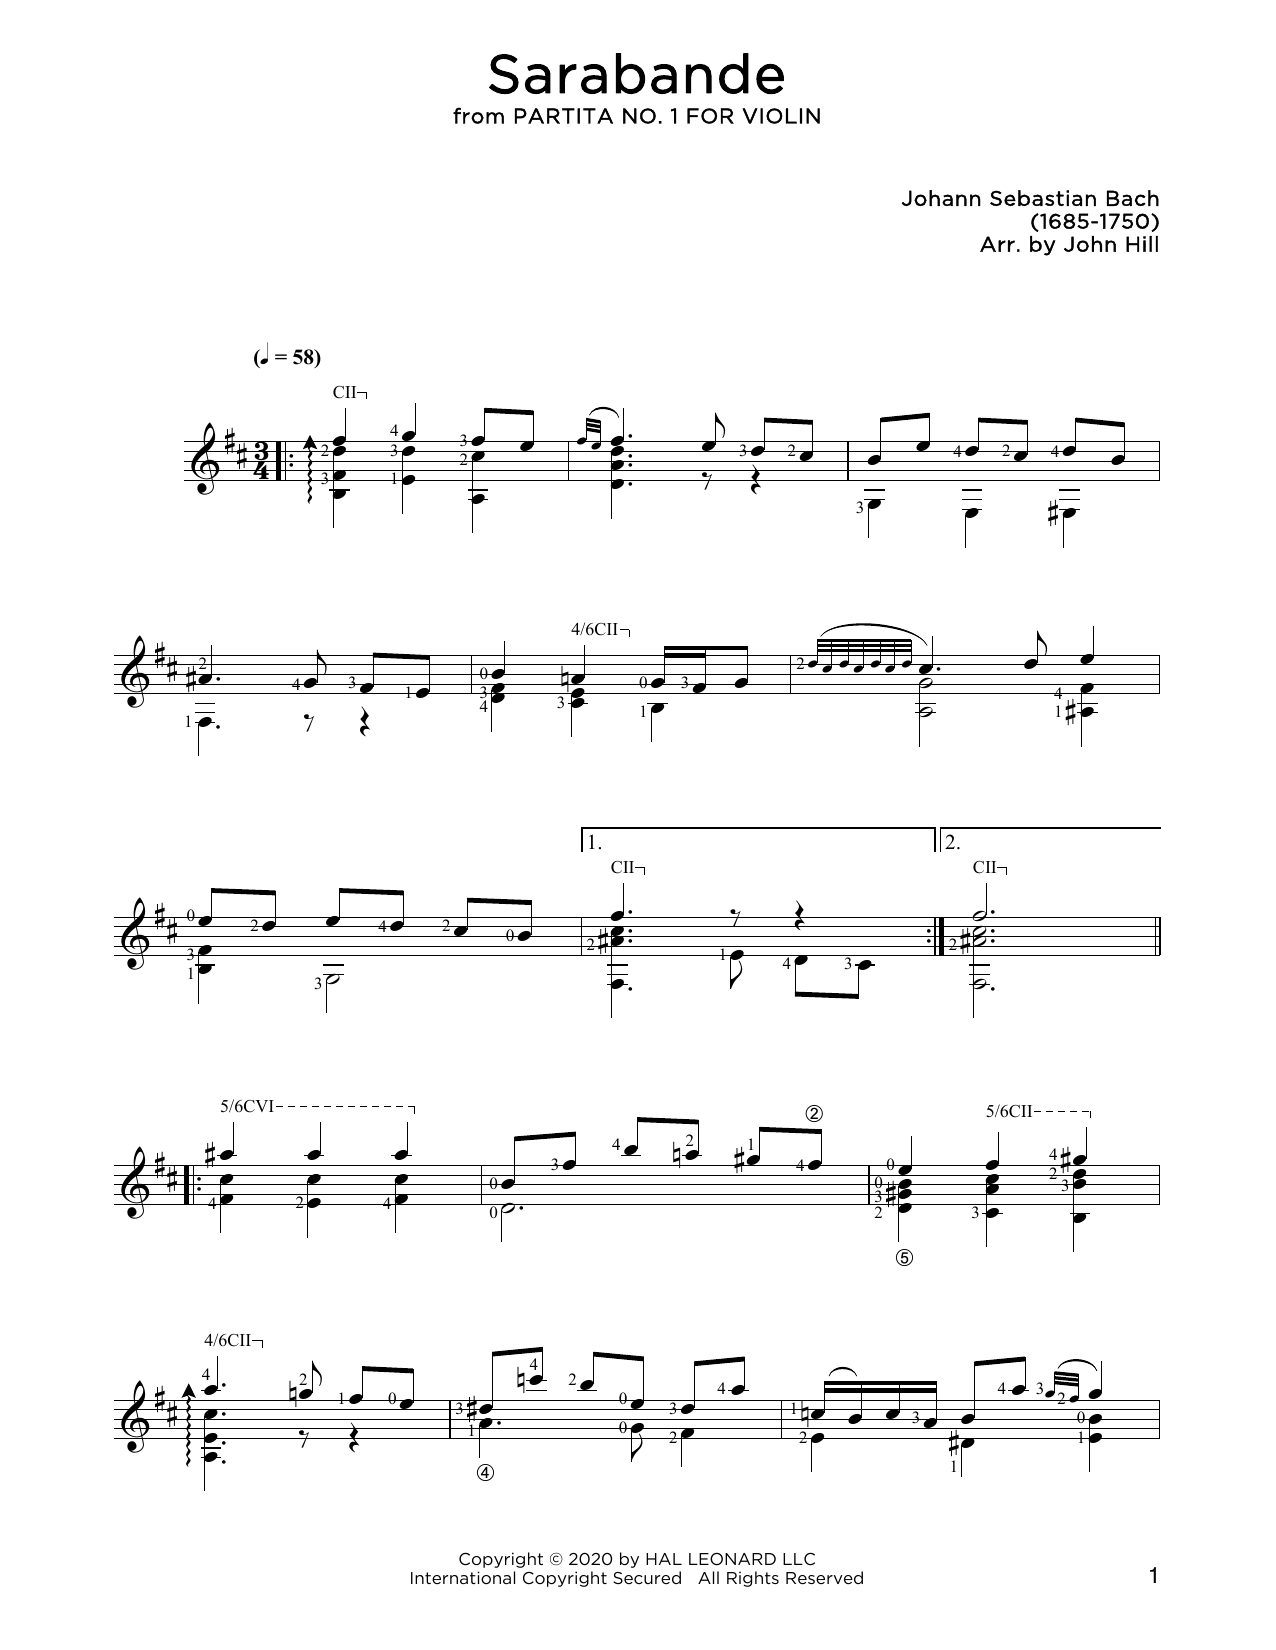 Johann Sebastian Bach Sarabande Sheet Music Notes & Chords for Solo Guitar - Download or Print PDF